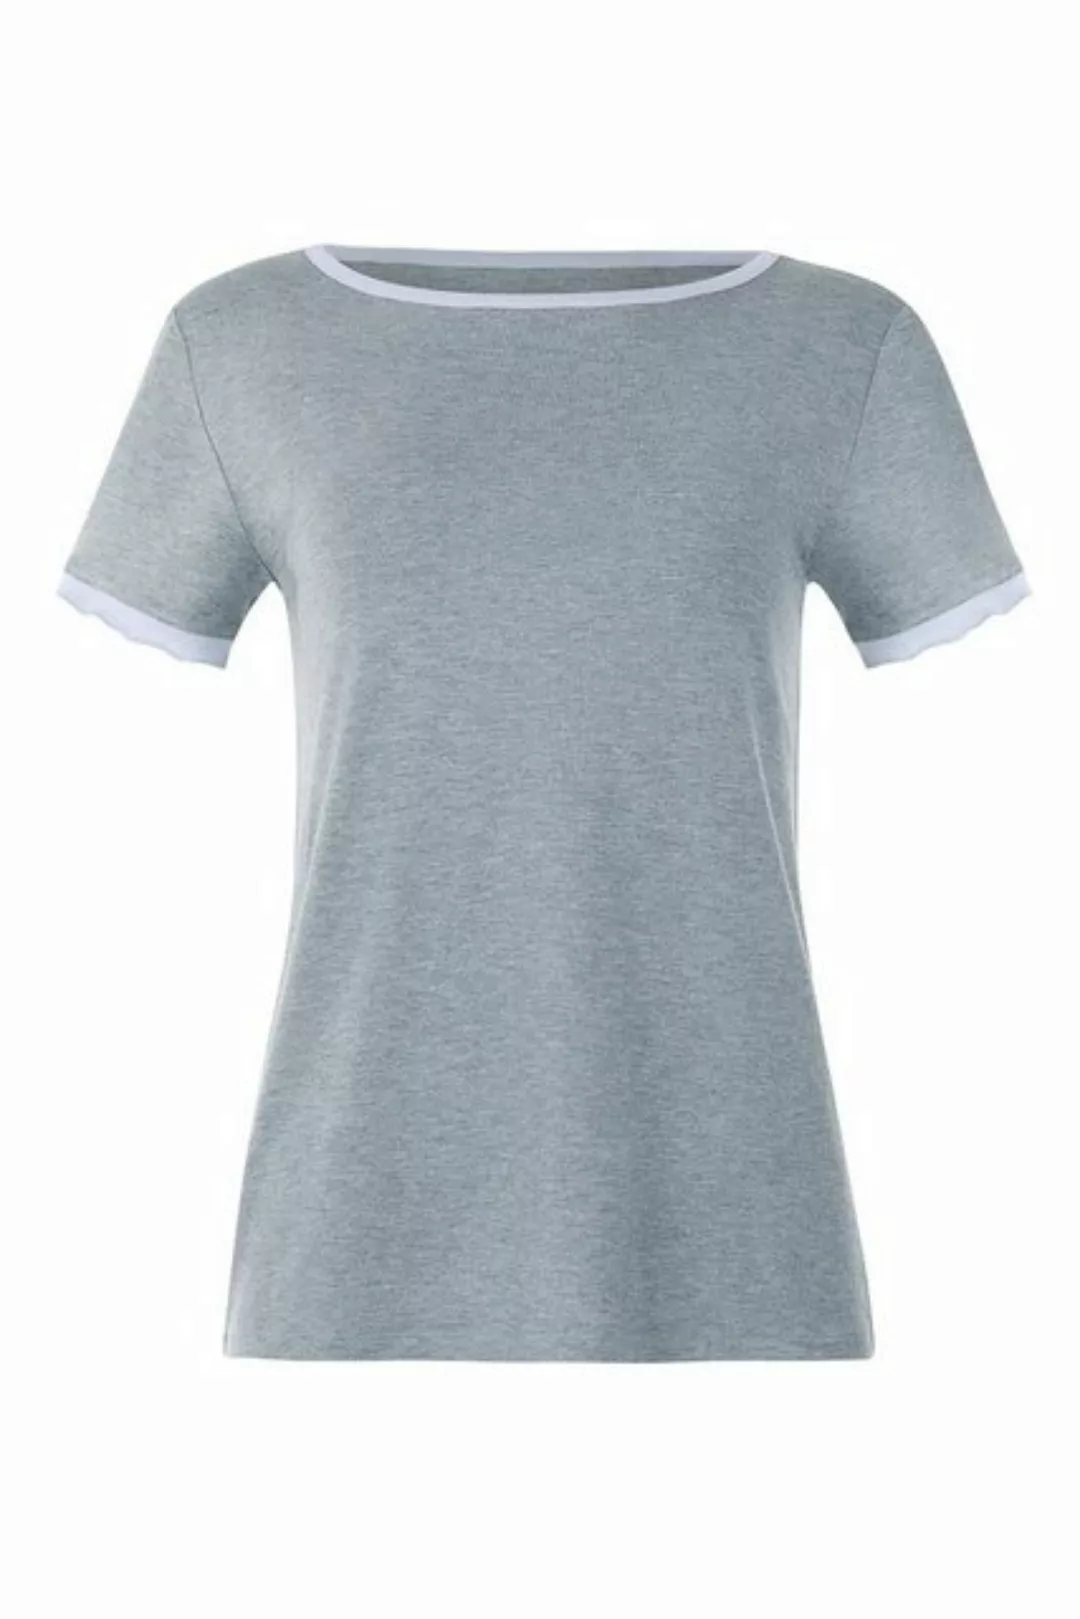 Lisca Shirt kurzarm Laura 42 grau günstig online kaufen